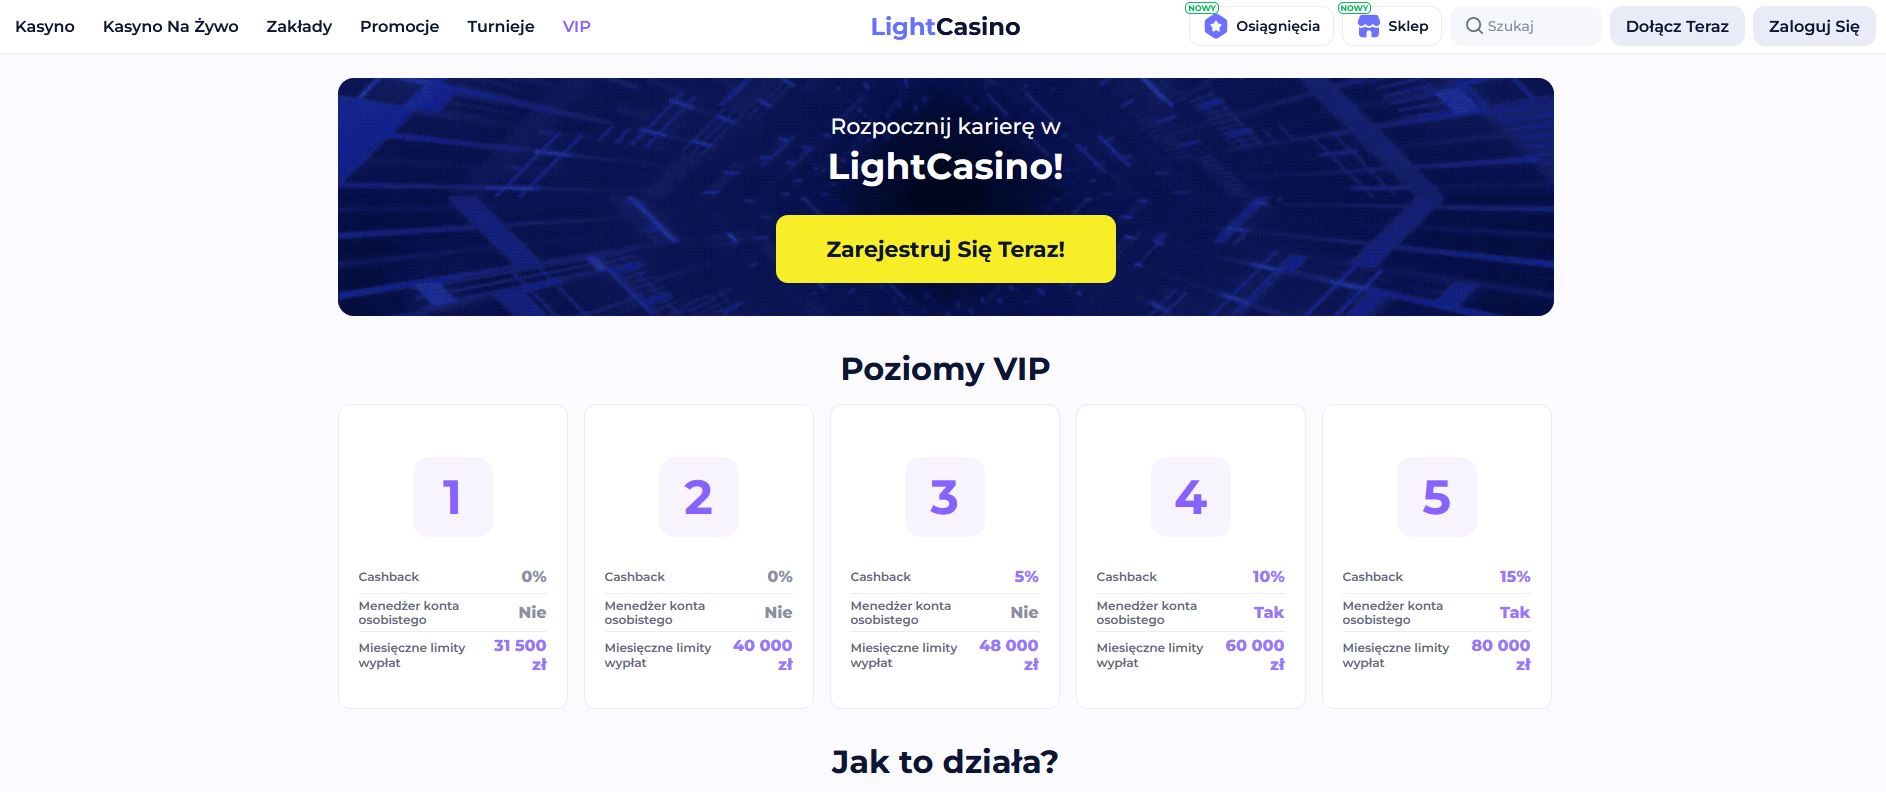 Lightcasino.com VIP program - Poziomy VIP